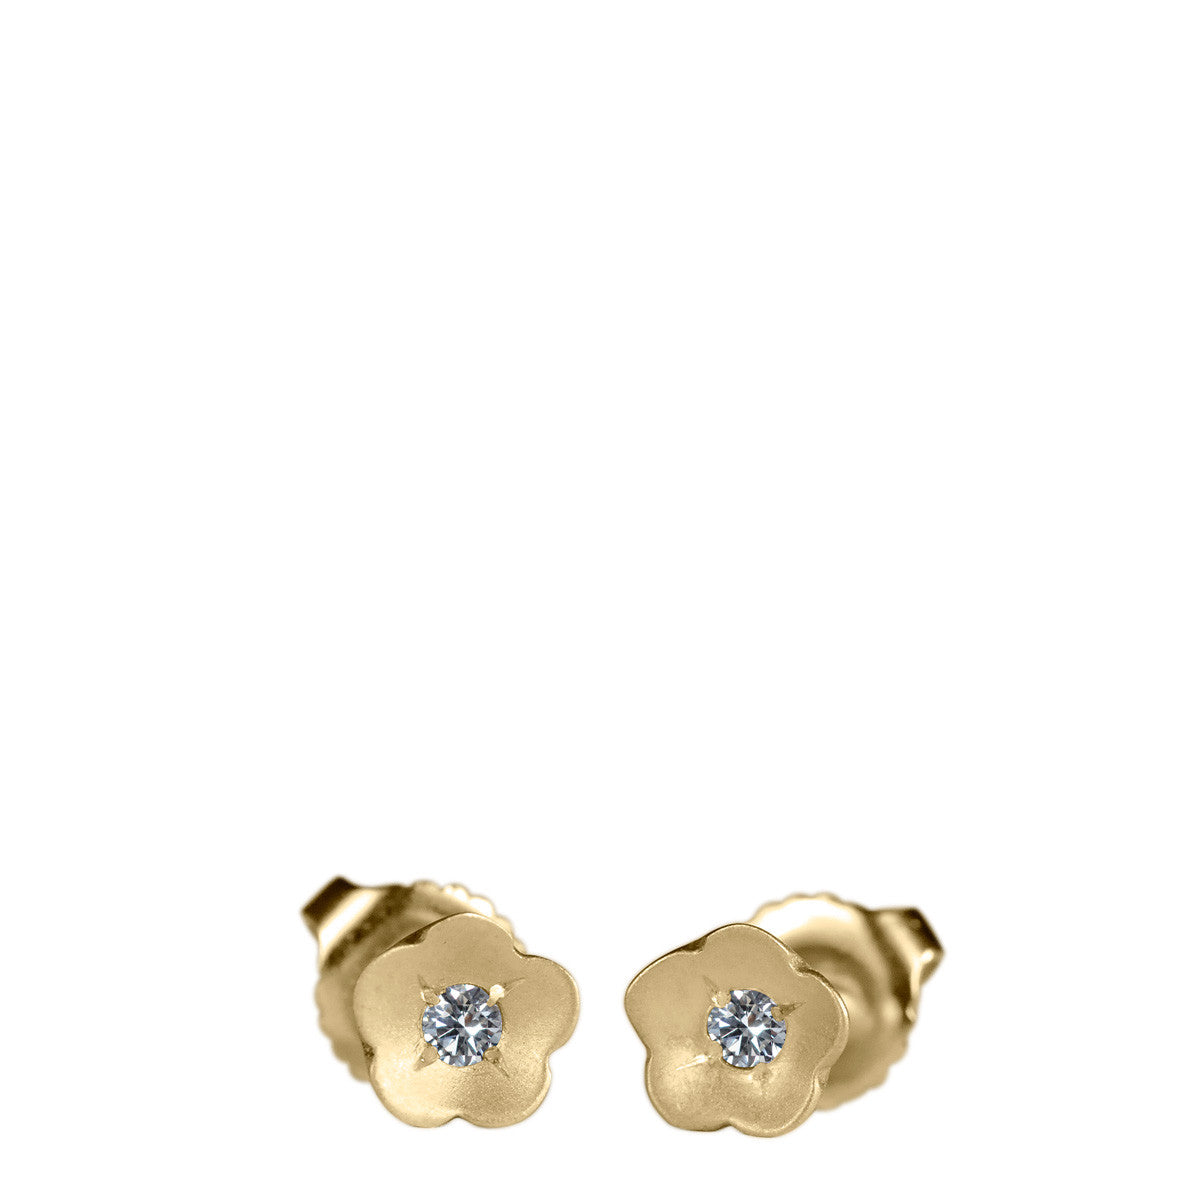 10K Gold Buttercup Stud Earrings with Diamonds